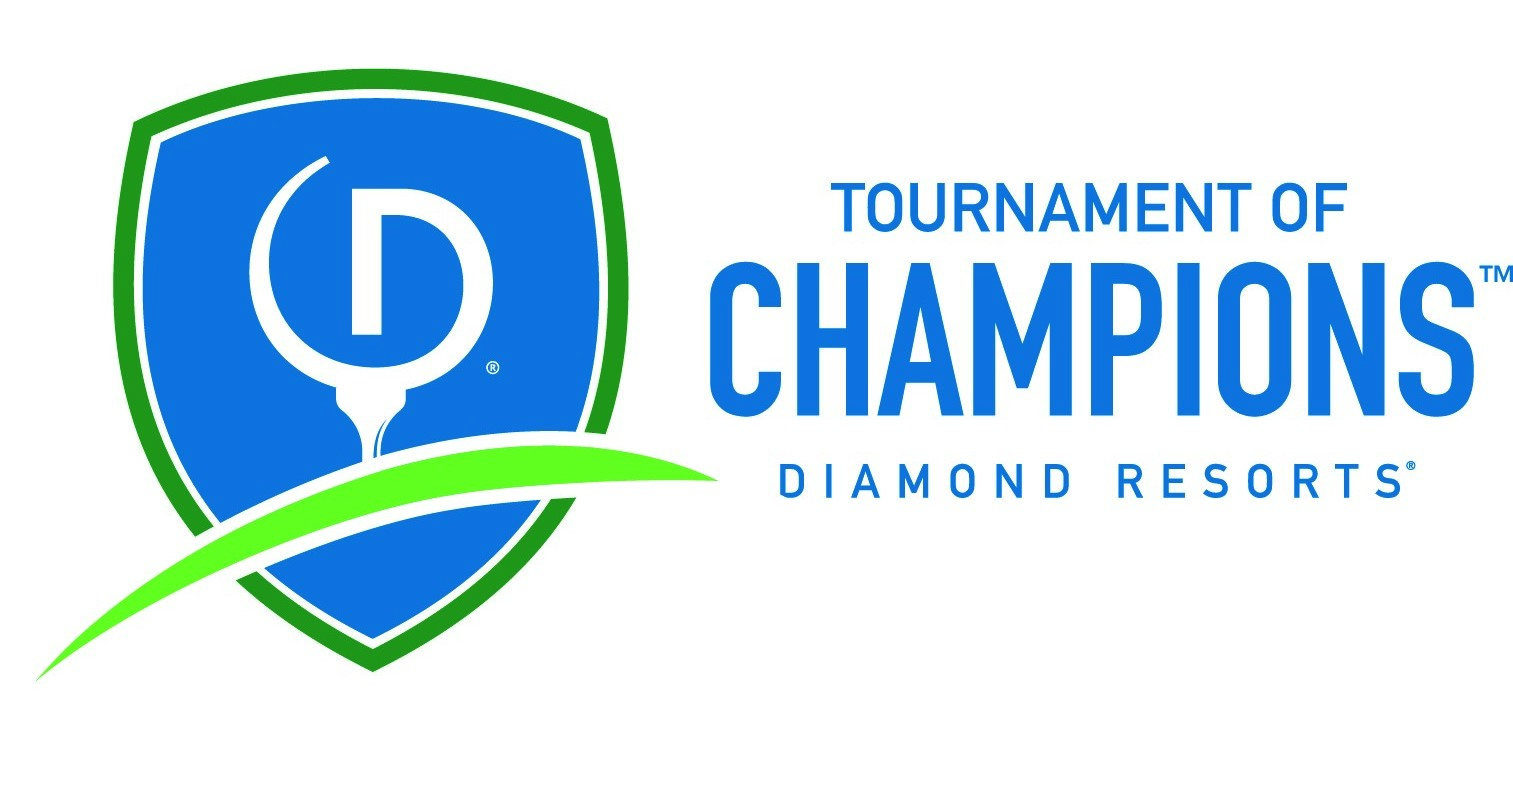 LPGA: Celebrities, athletes dish on Tournament of Champions experience